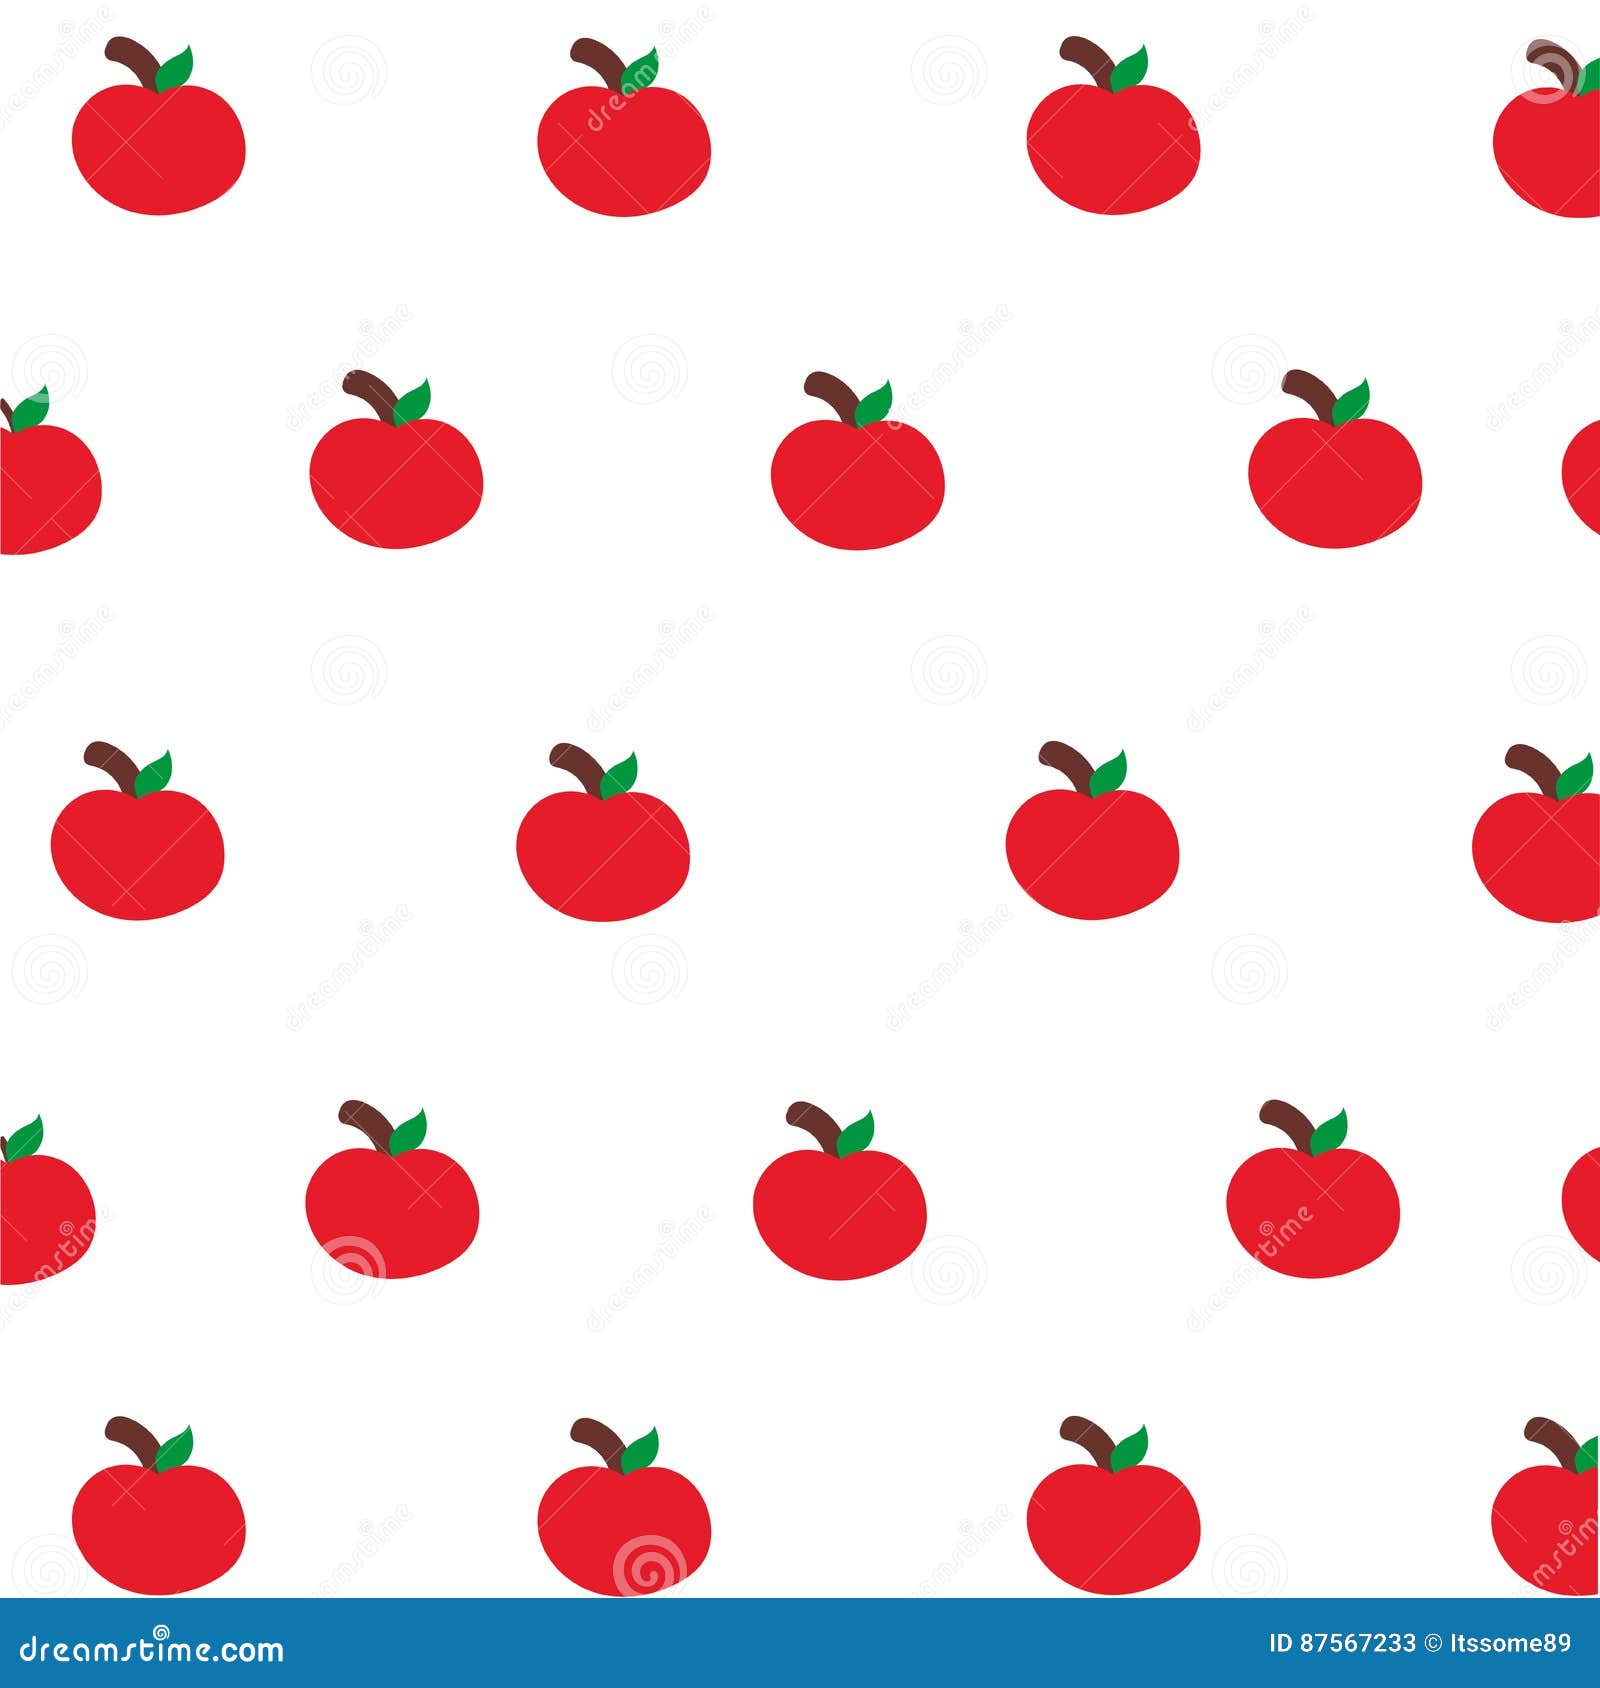 Cute red apple wallpaper stock illustration. Illustration ...